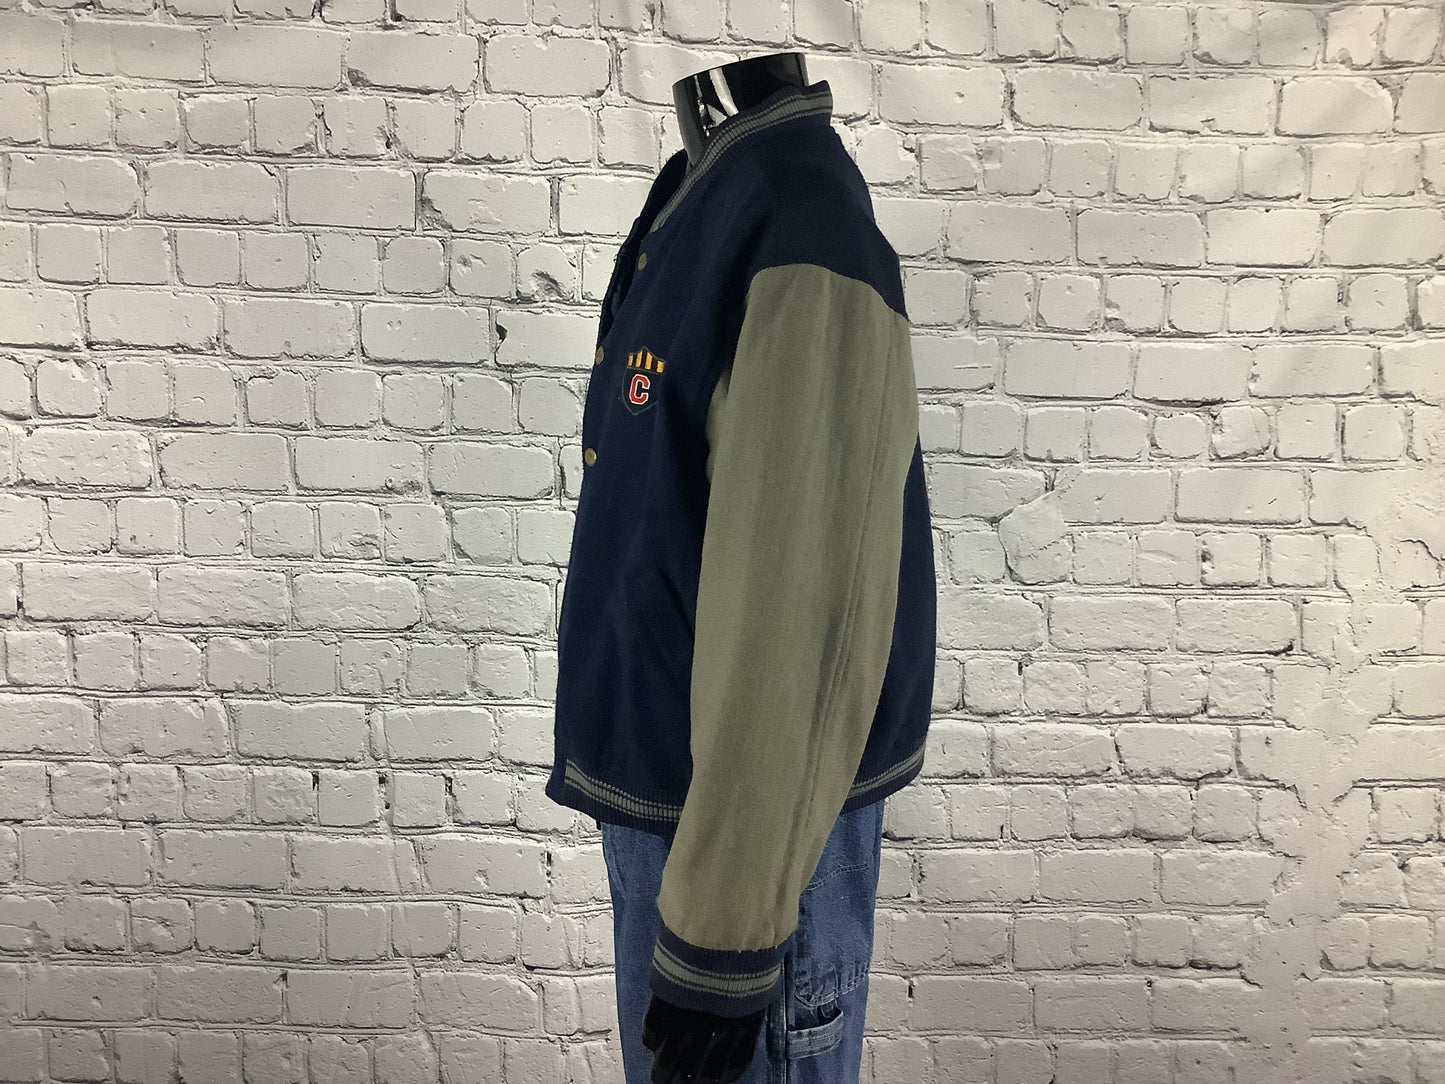 1990's Lived In Vintage Blue and Grey Reversible Varsity Jacket